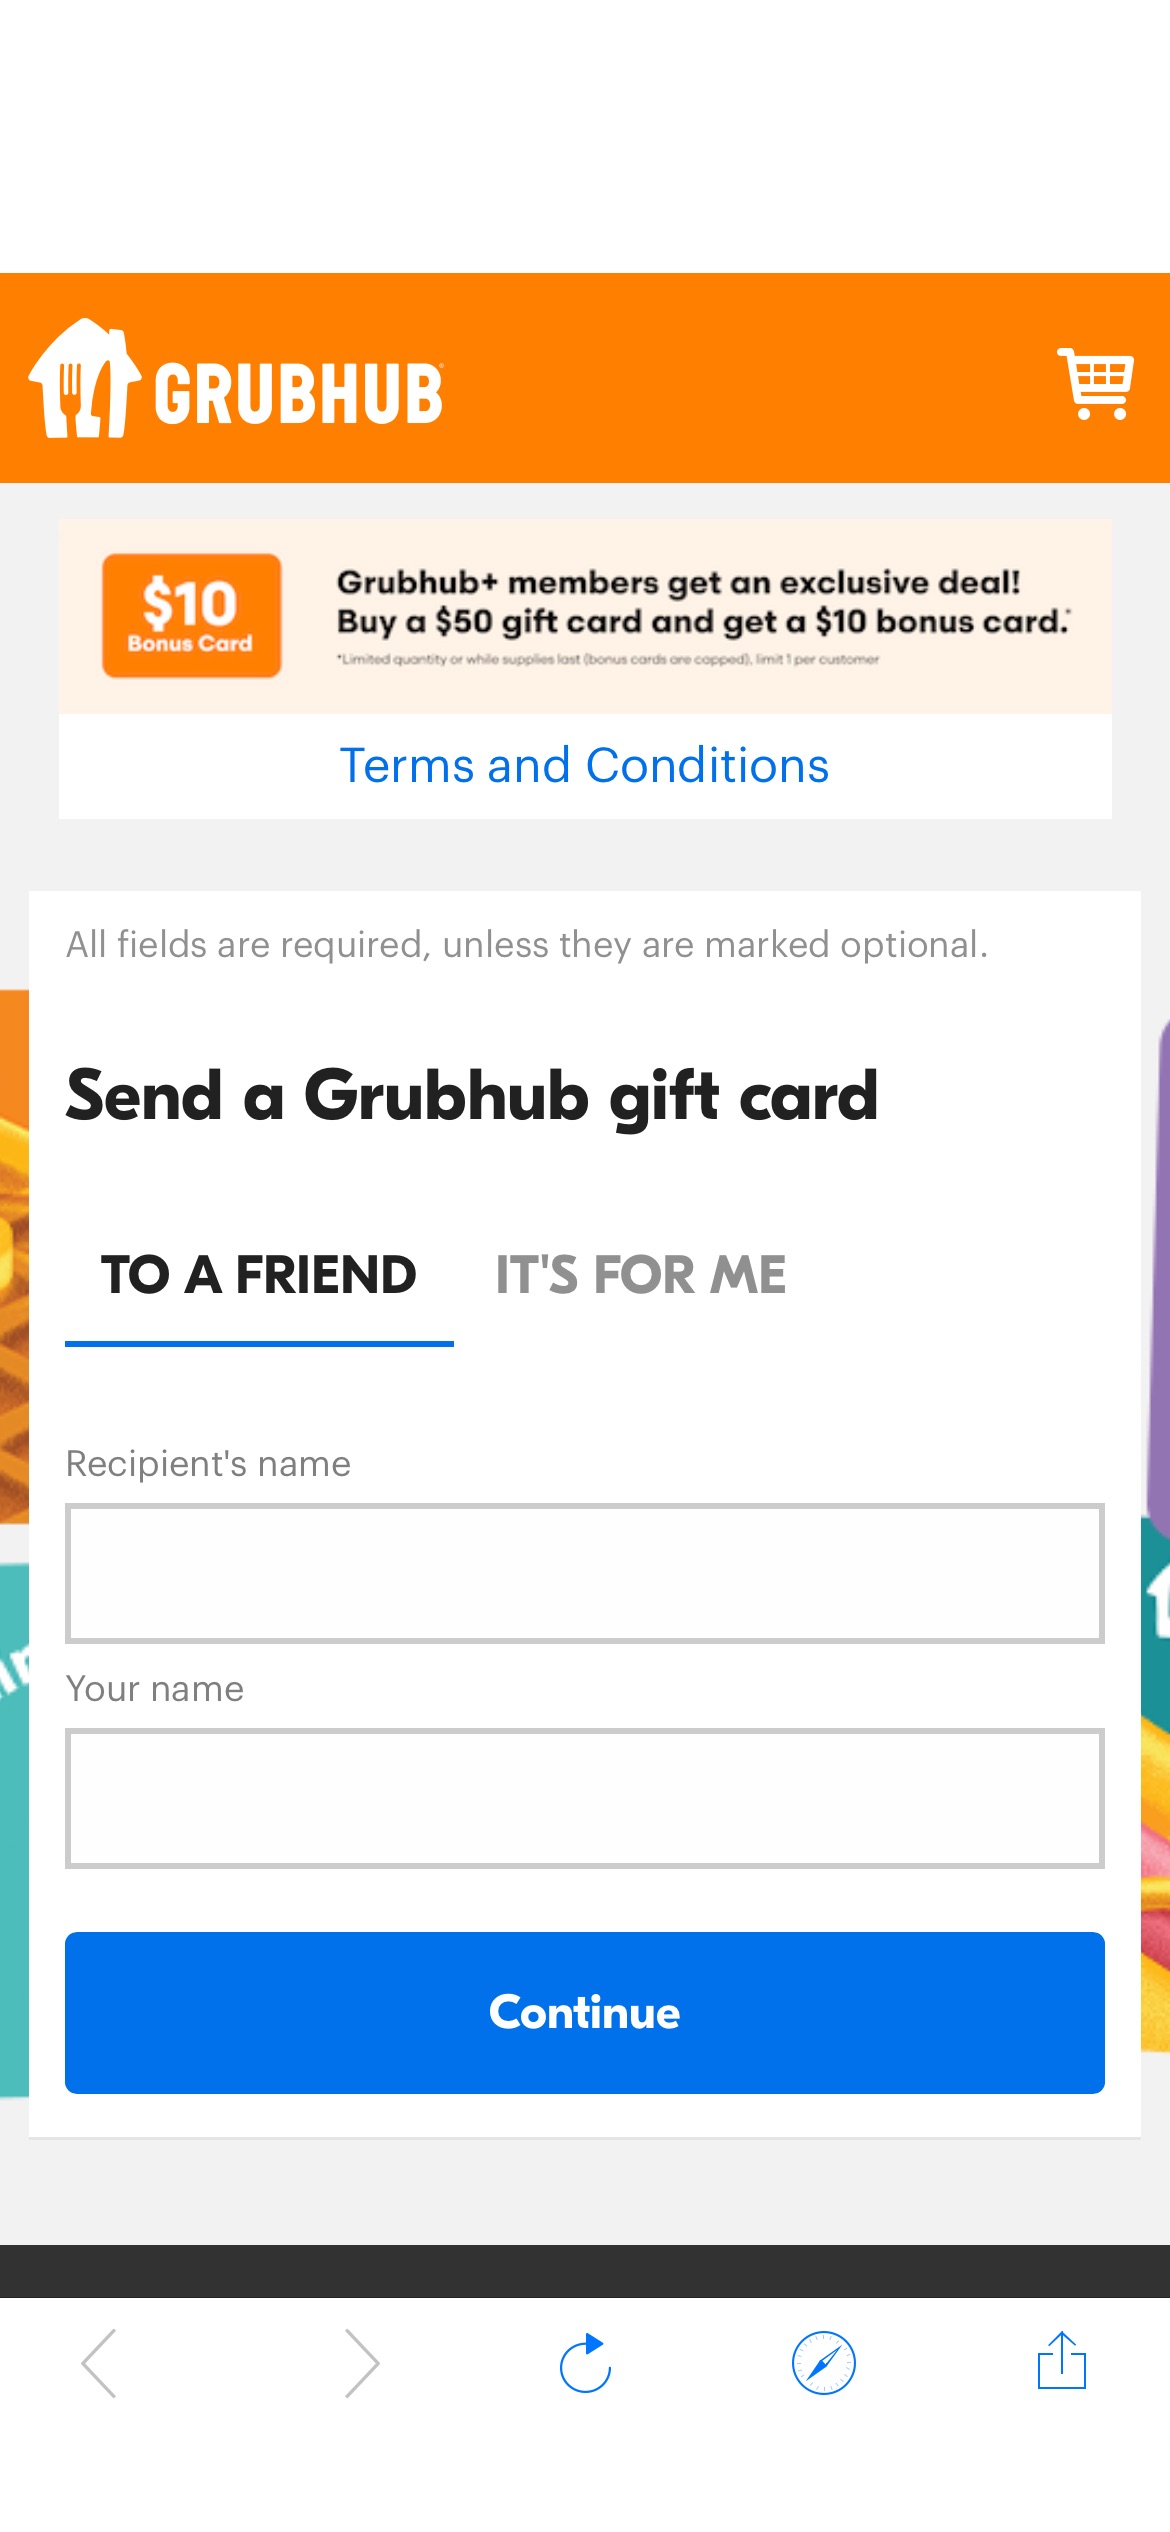 Grubhub Gift Cards by CashStar